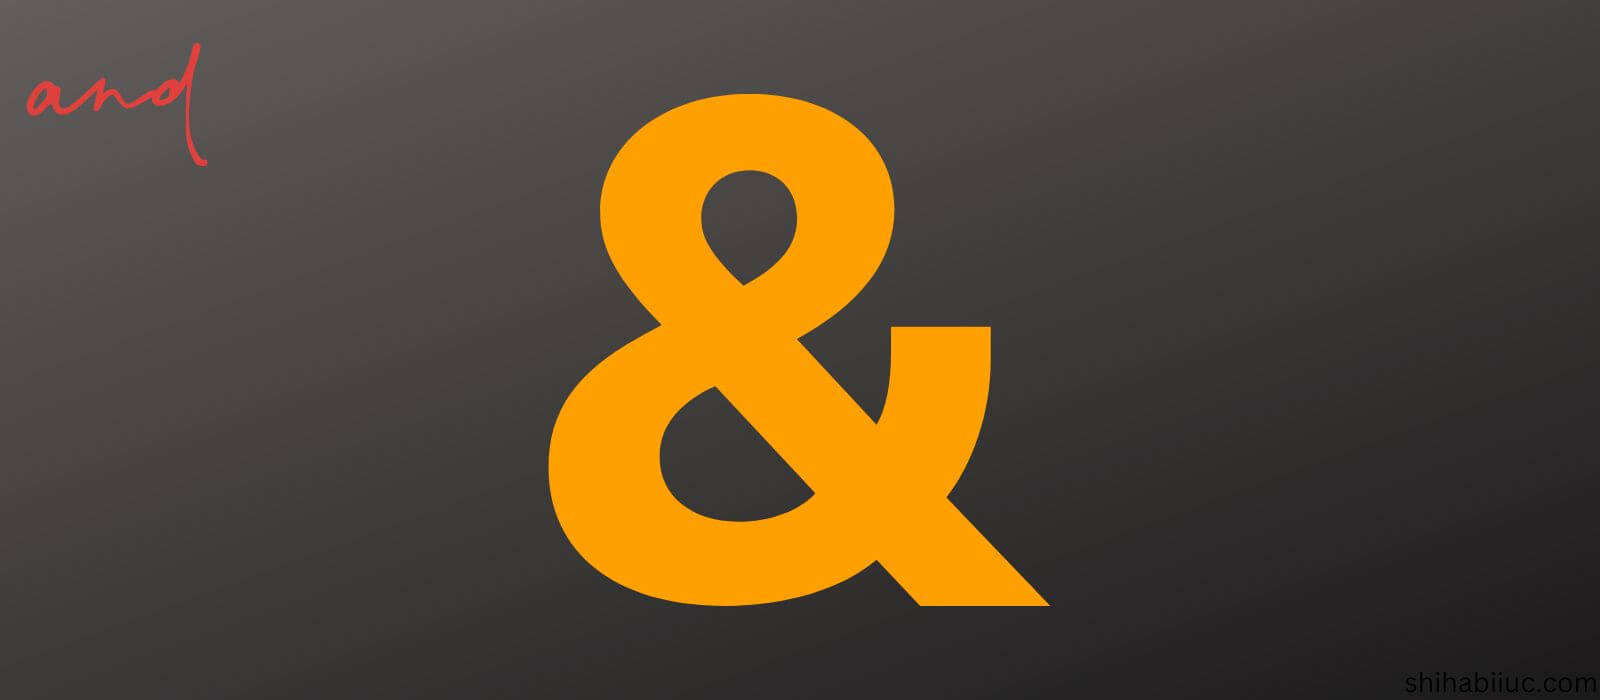 ampersand symbol